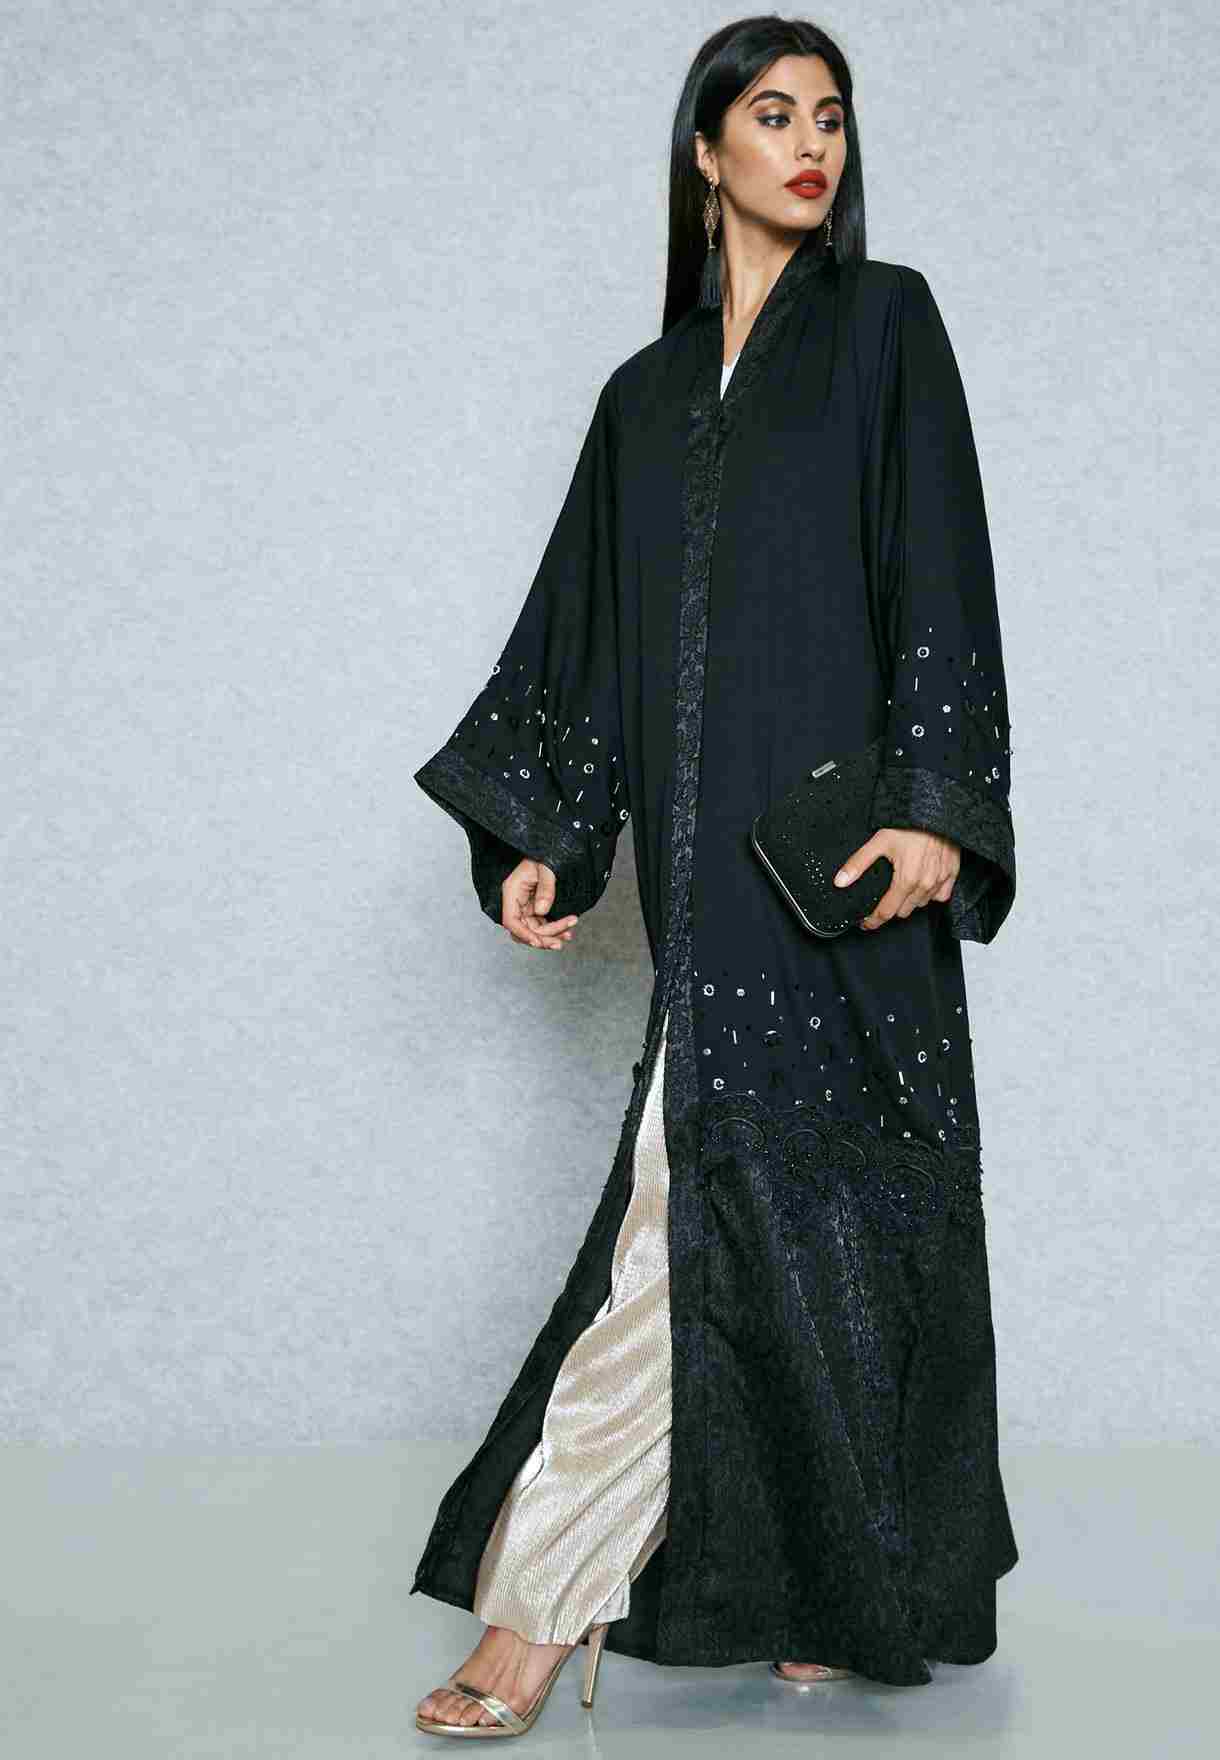 10 New Abaya Styles For Muslim Women In 2022